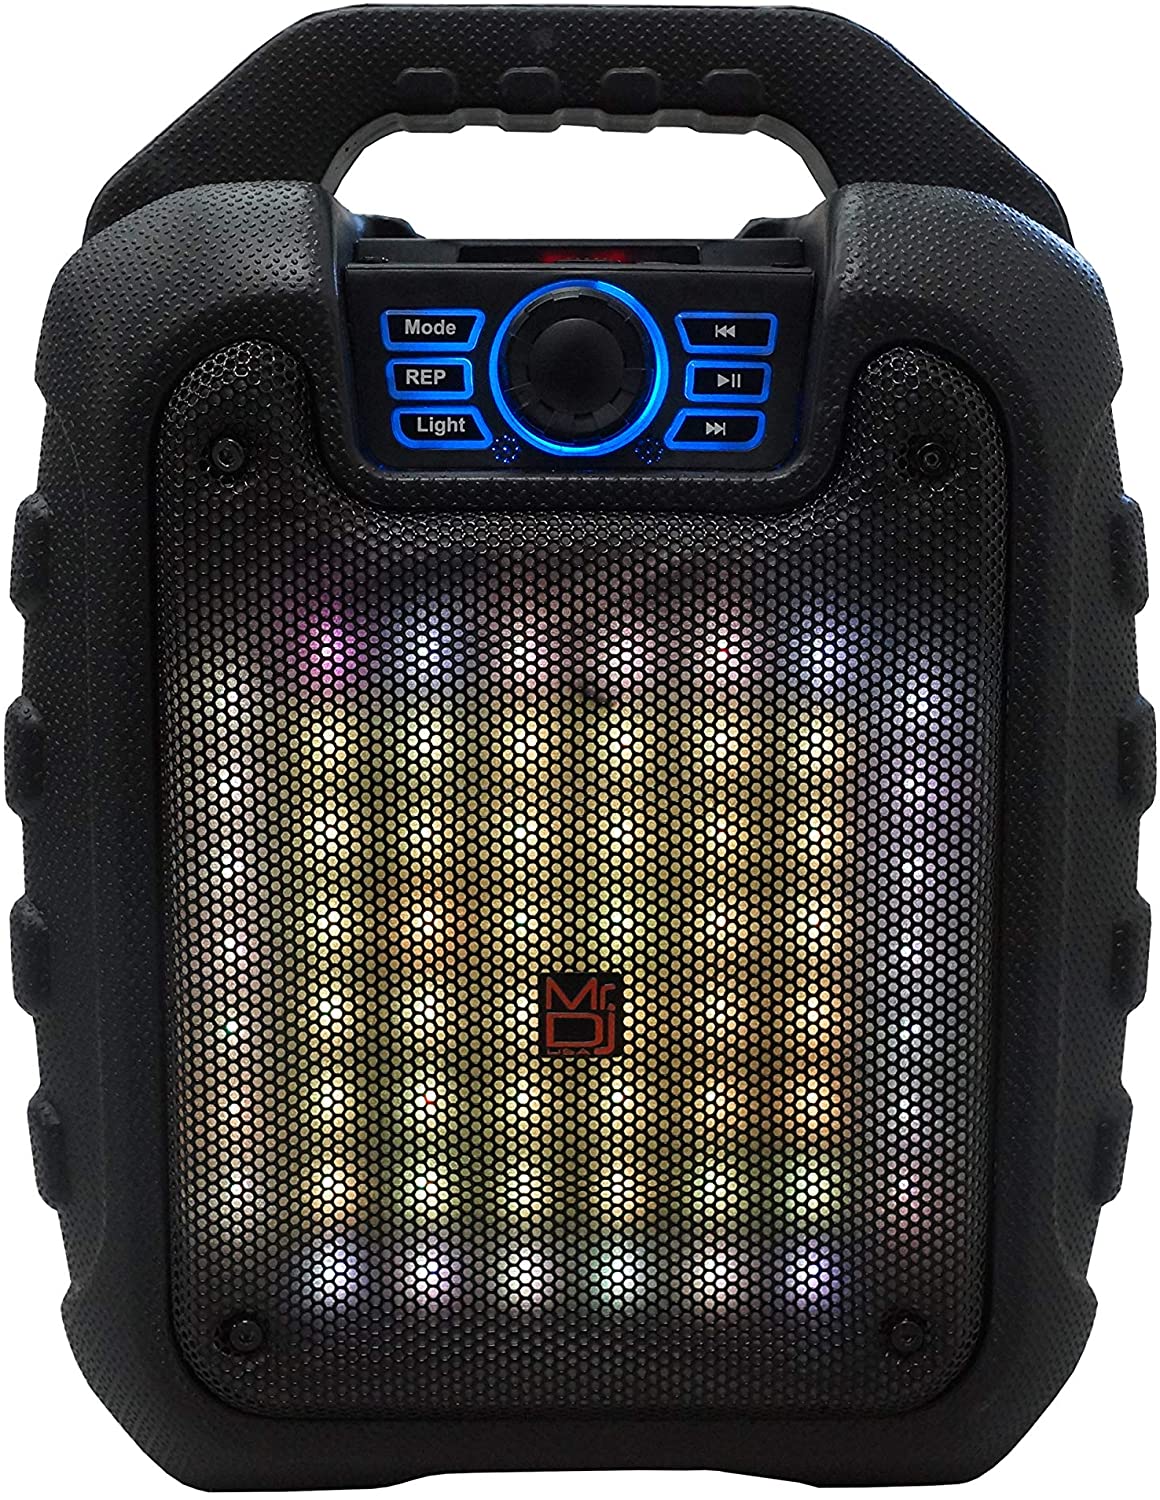 MR. DJ DISCO 5.25" portable speaker w/ Bluetooth rechargeable battery & led light